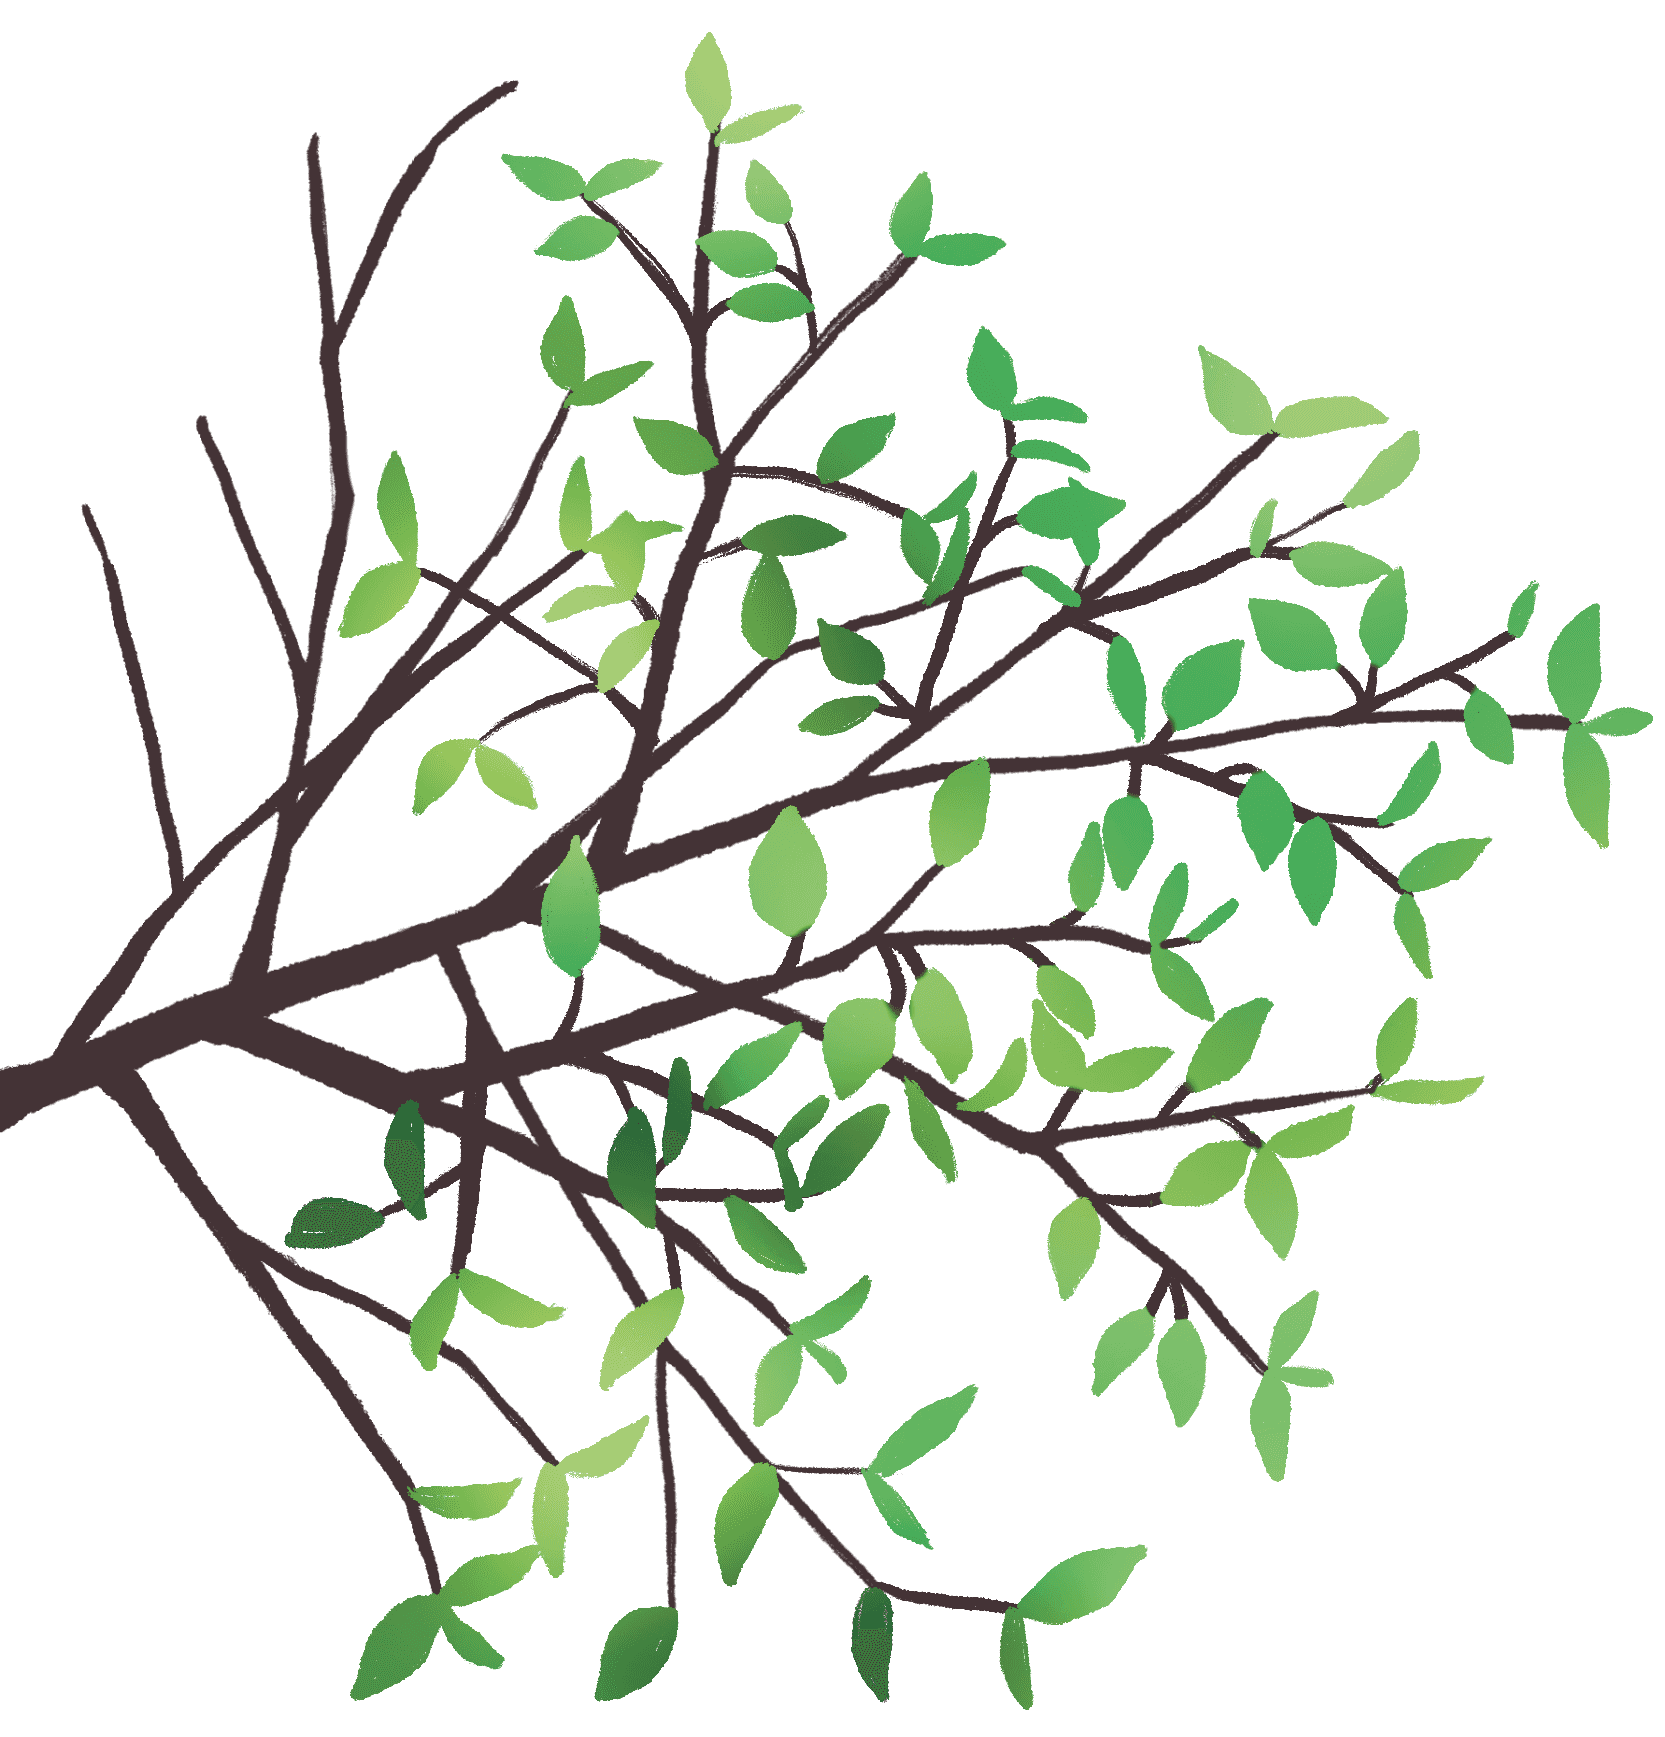 Illust of branch